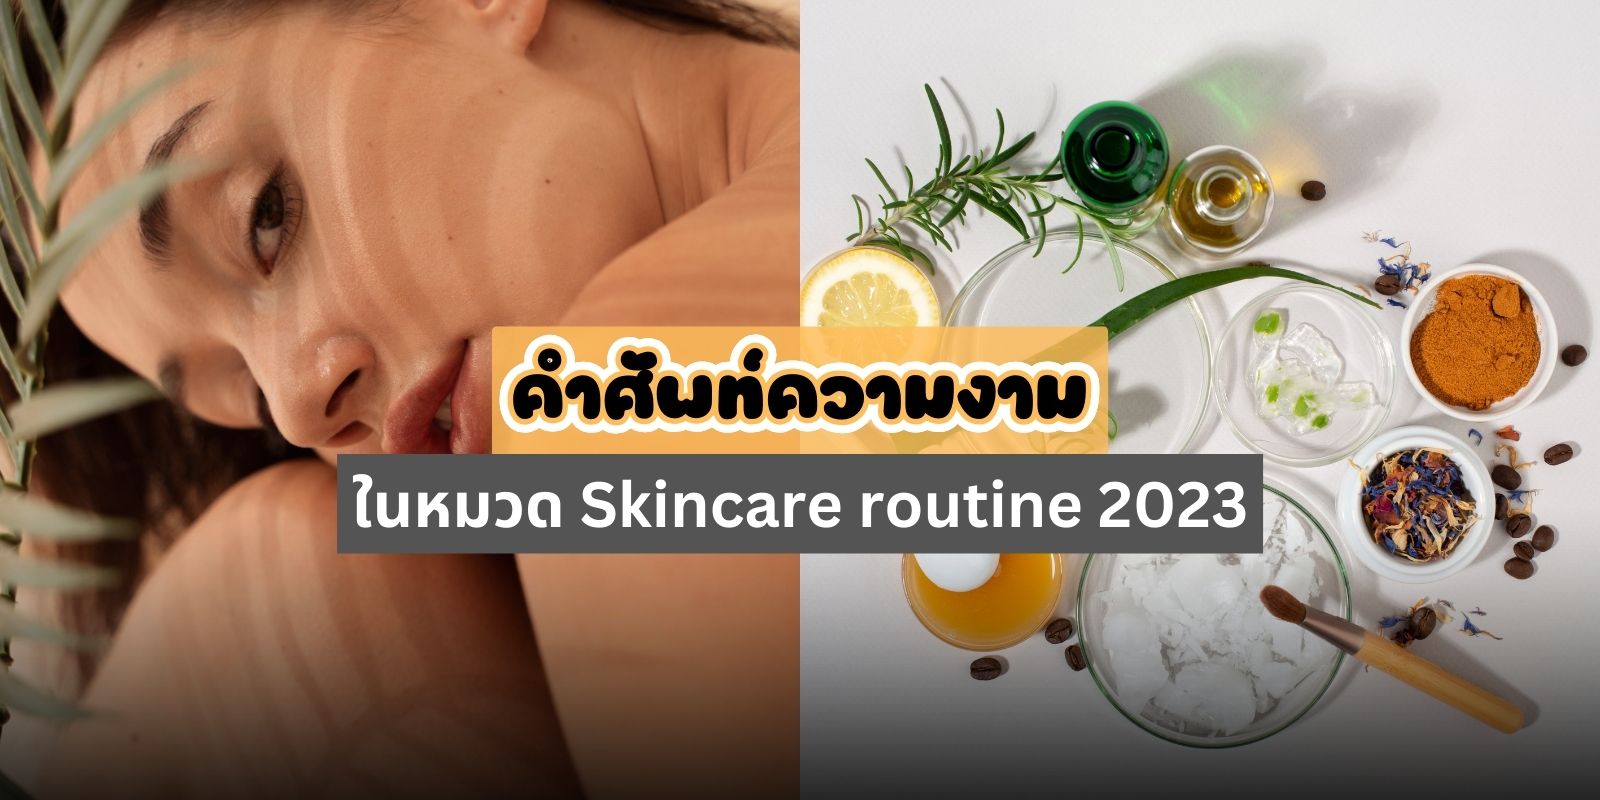 Skincare routine 2023